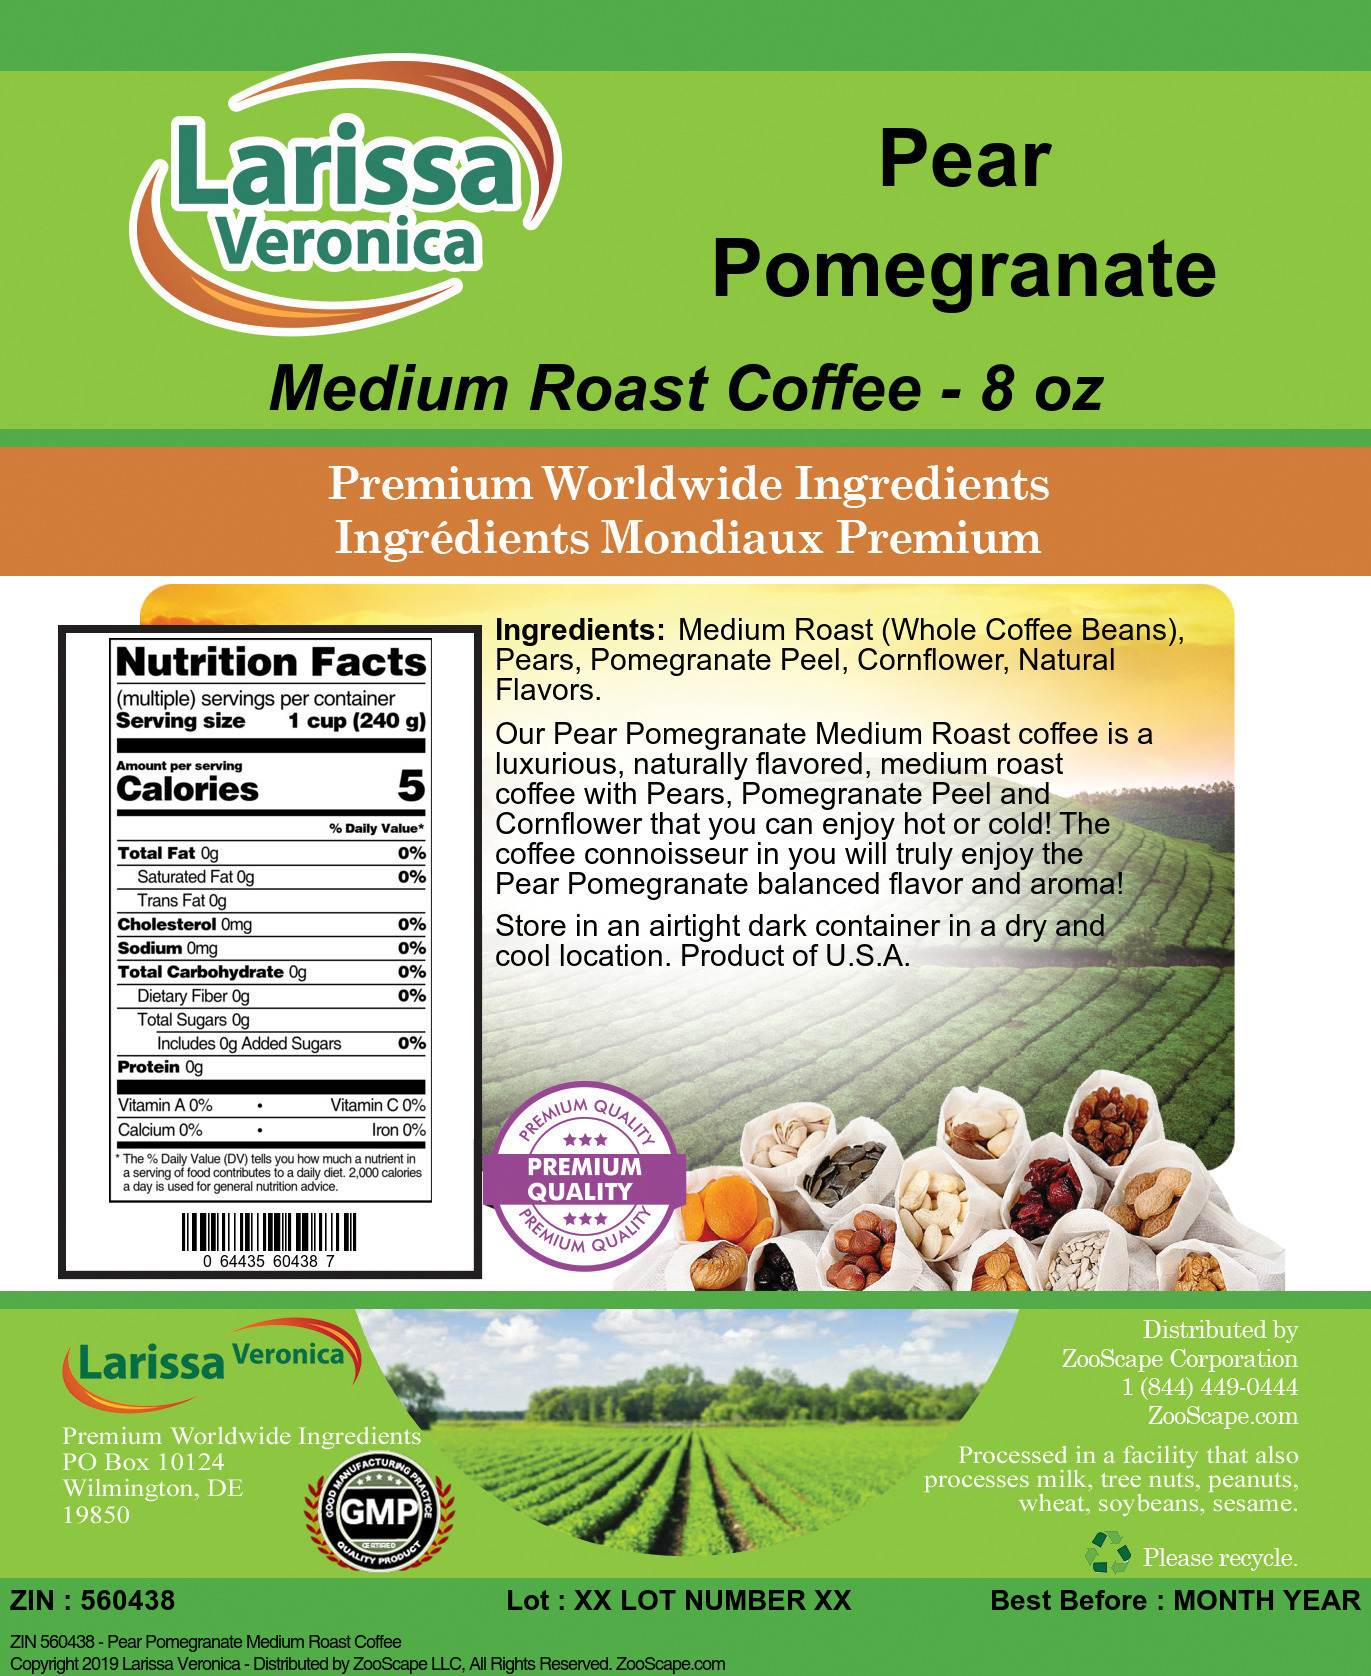 Pear Pomegranate Medium Roast Coffee - Label